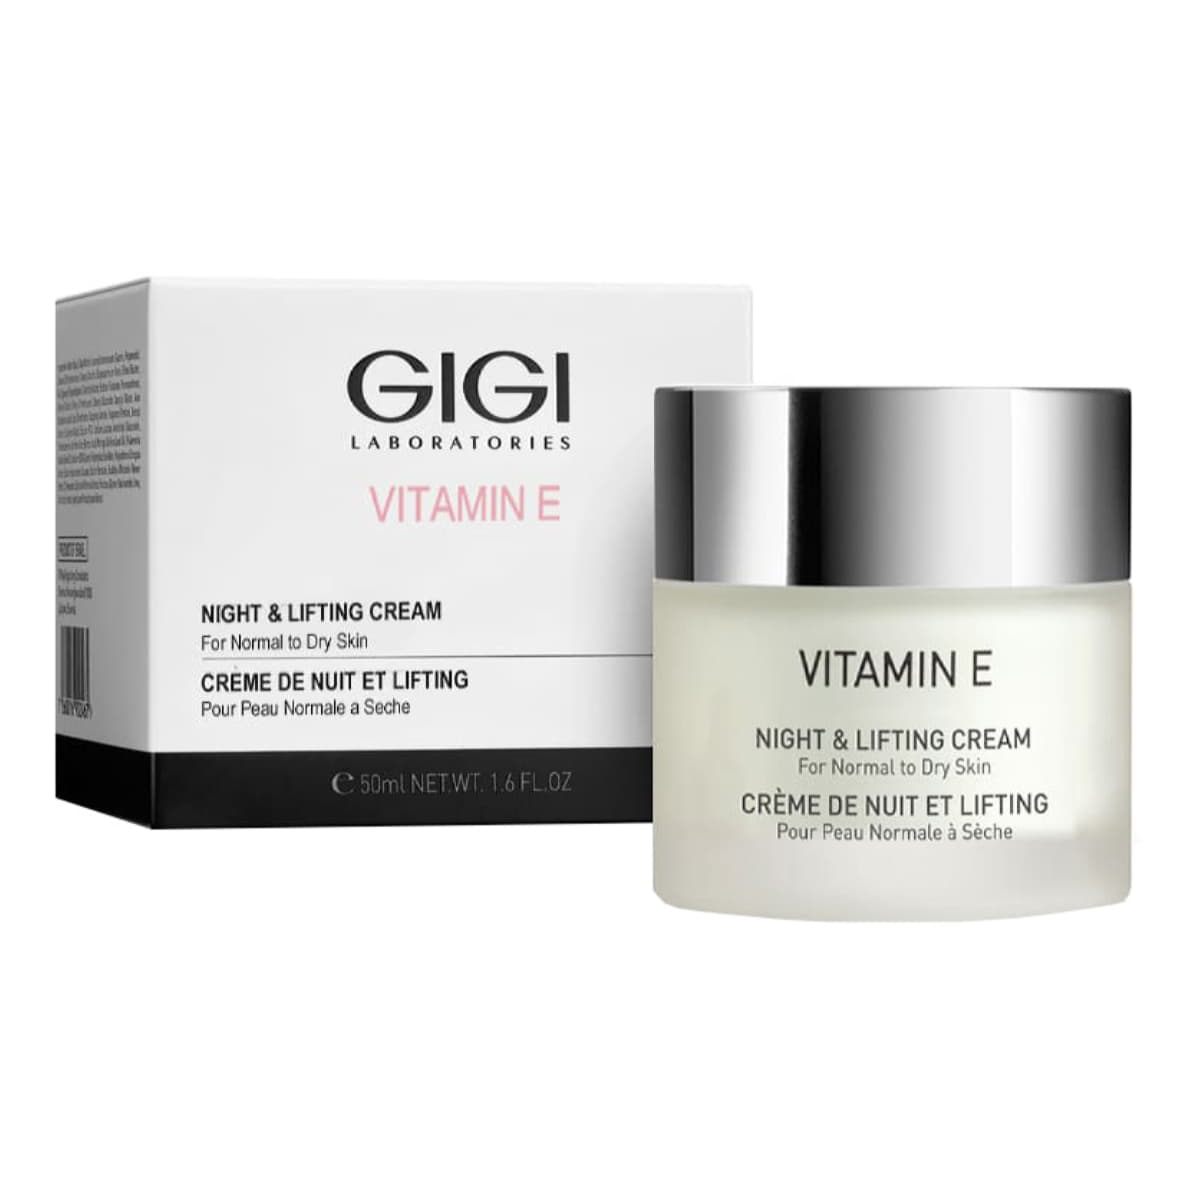 GIGI Ночной лифтинговый крем Night & Lifting Cream, 50 мл (GIGI, Vitamin E) от Pharmacosmetica.ru